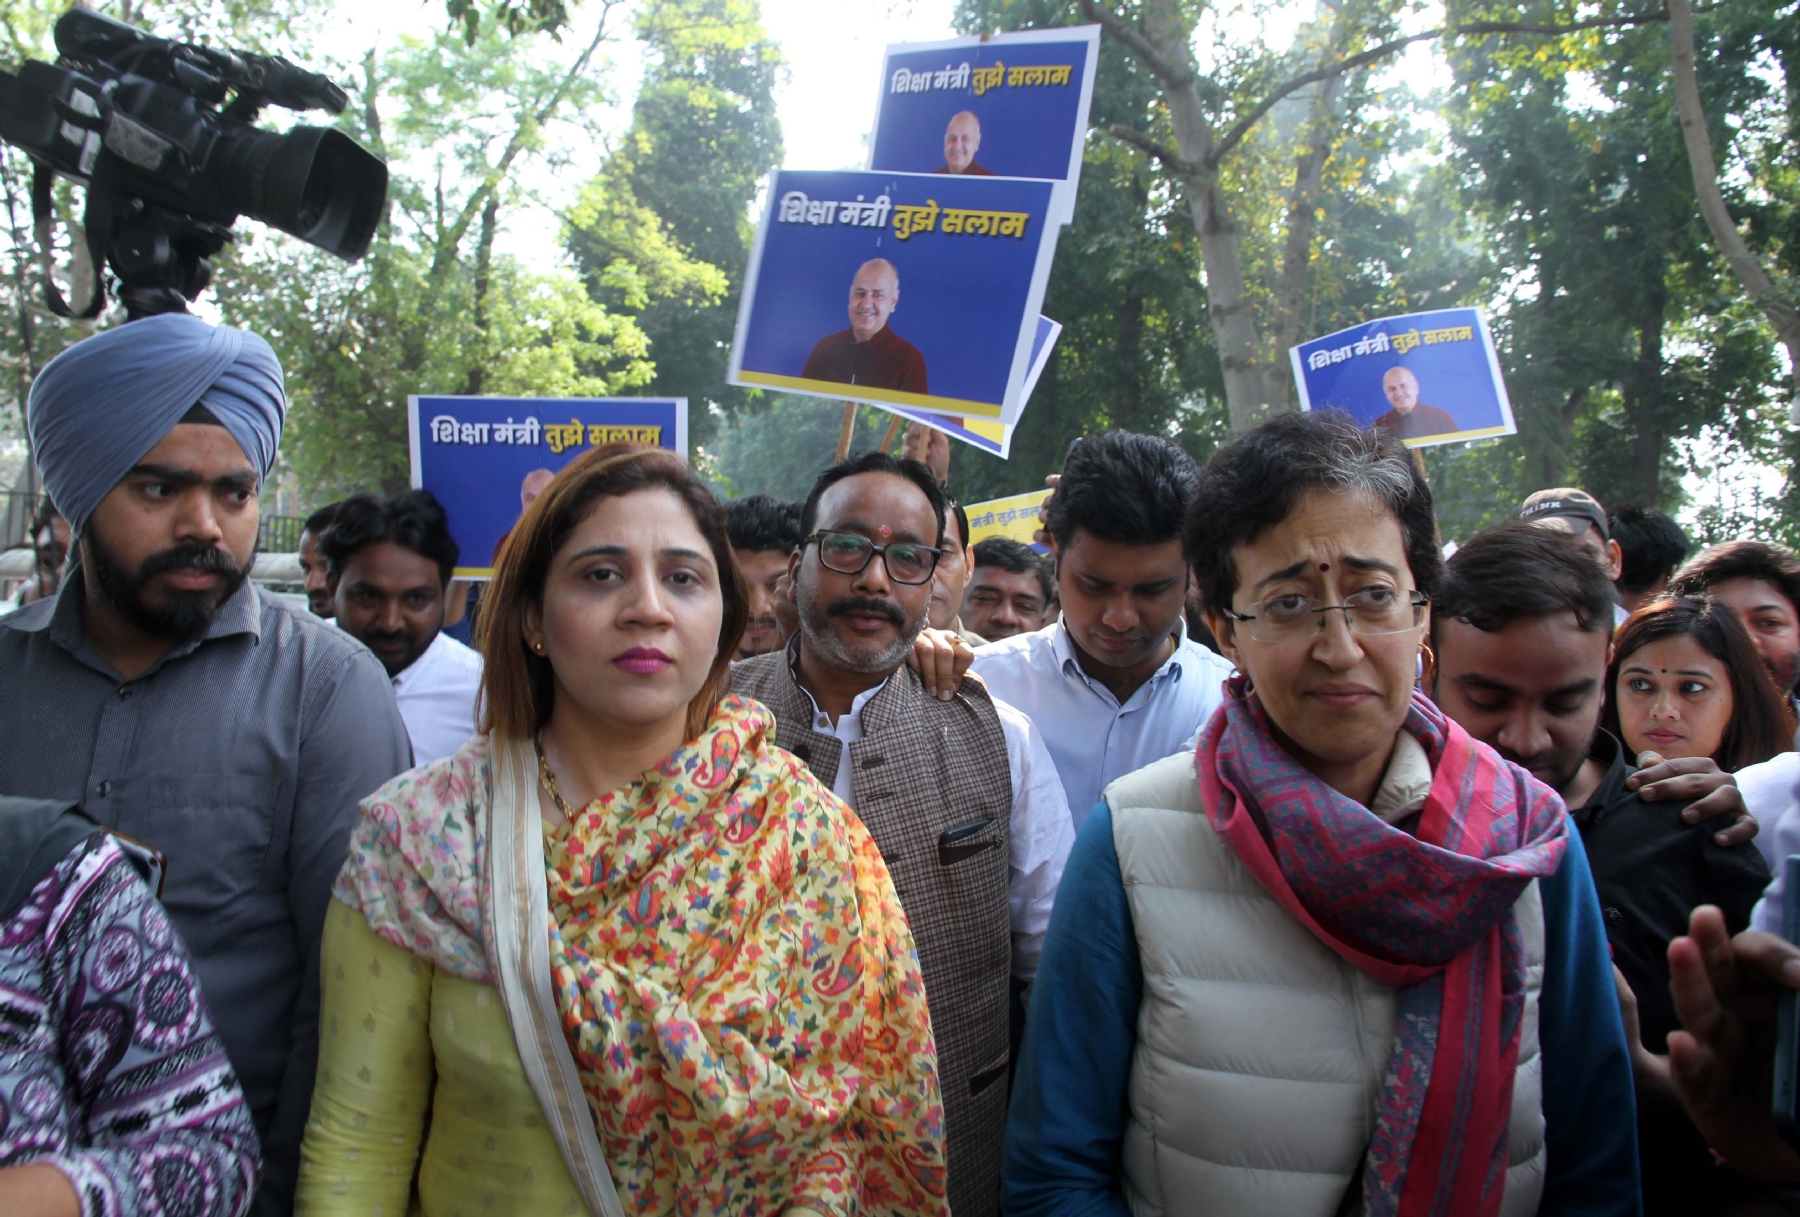 नई दिल्ली में रविवार 26 फरवारी को उपमुख्यमंत्री मनीष सिसोदिया को गिरफ़्तारी कर लेजाती सीबीआई। हिन्दुस्थान समाचार/ फोटो गणेश बिष्ट